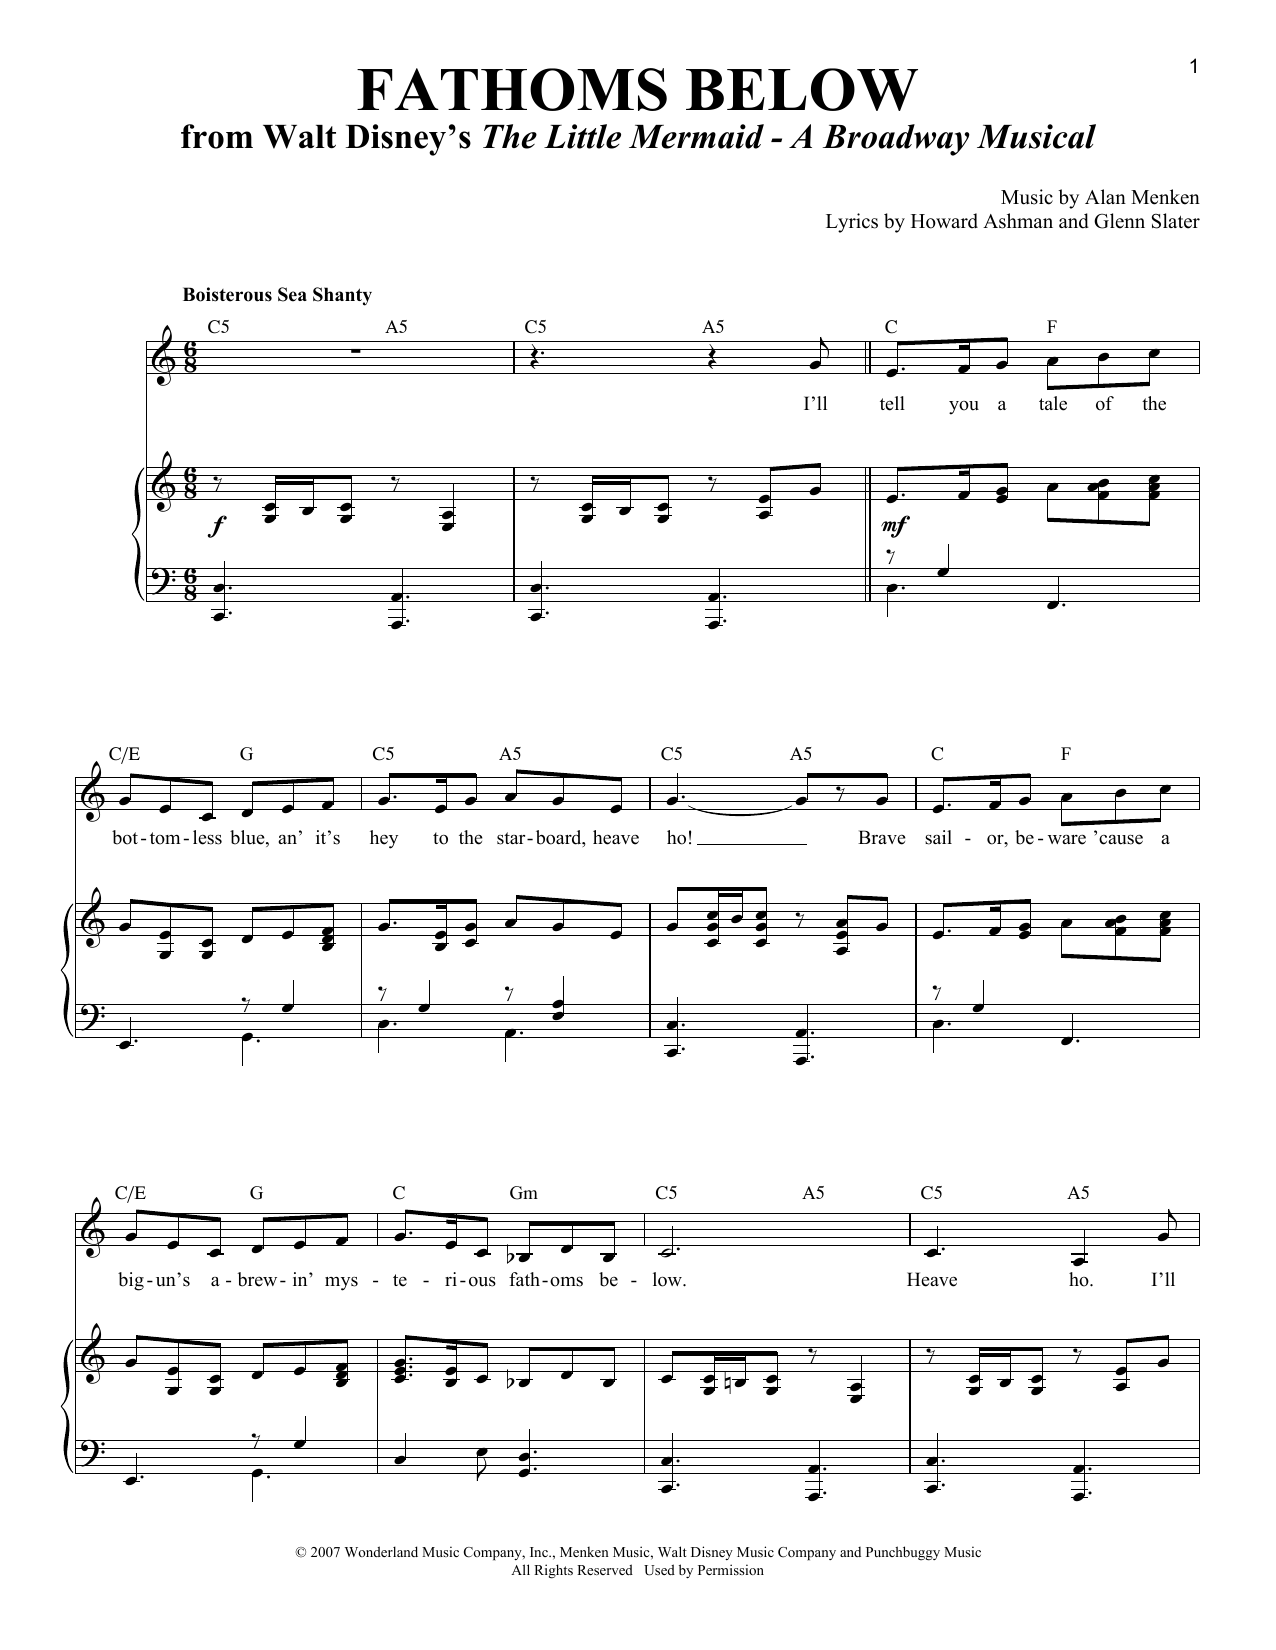 Alan Menken Fathoms Below Sheet Music Notes & Chords for Piano & Vocal - Download or Print PDF